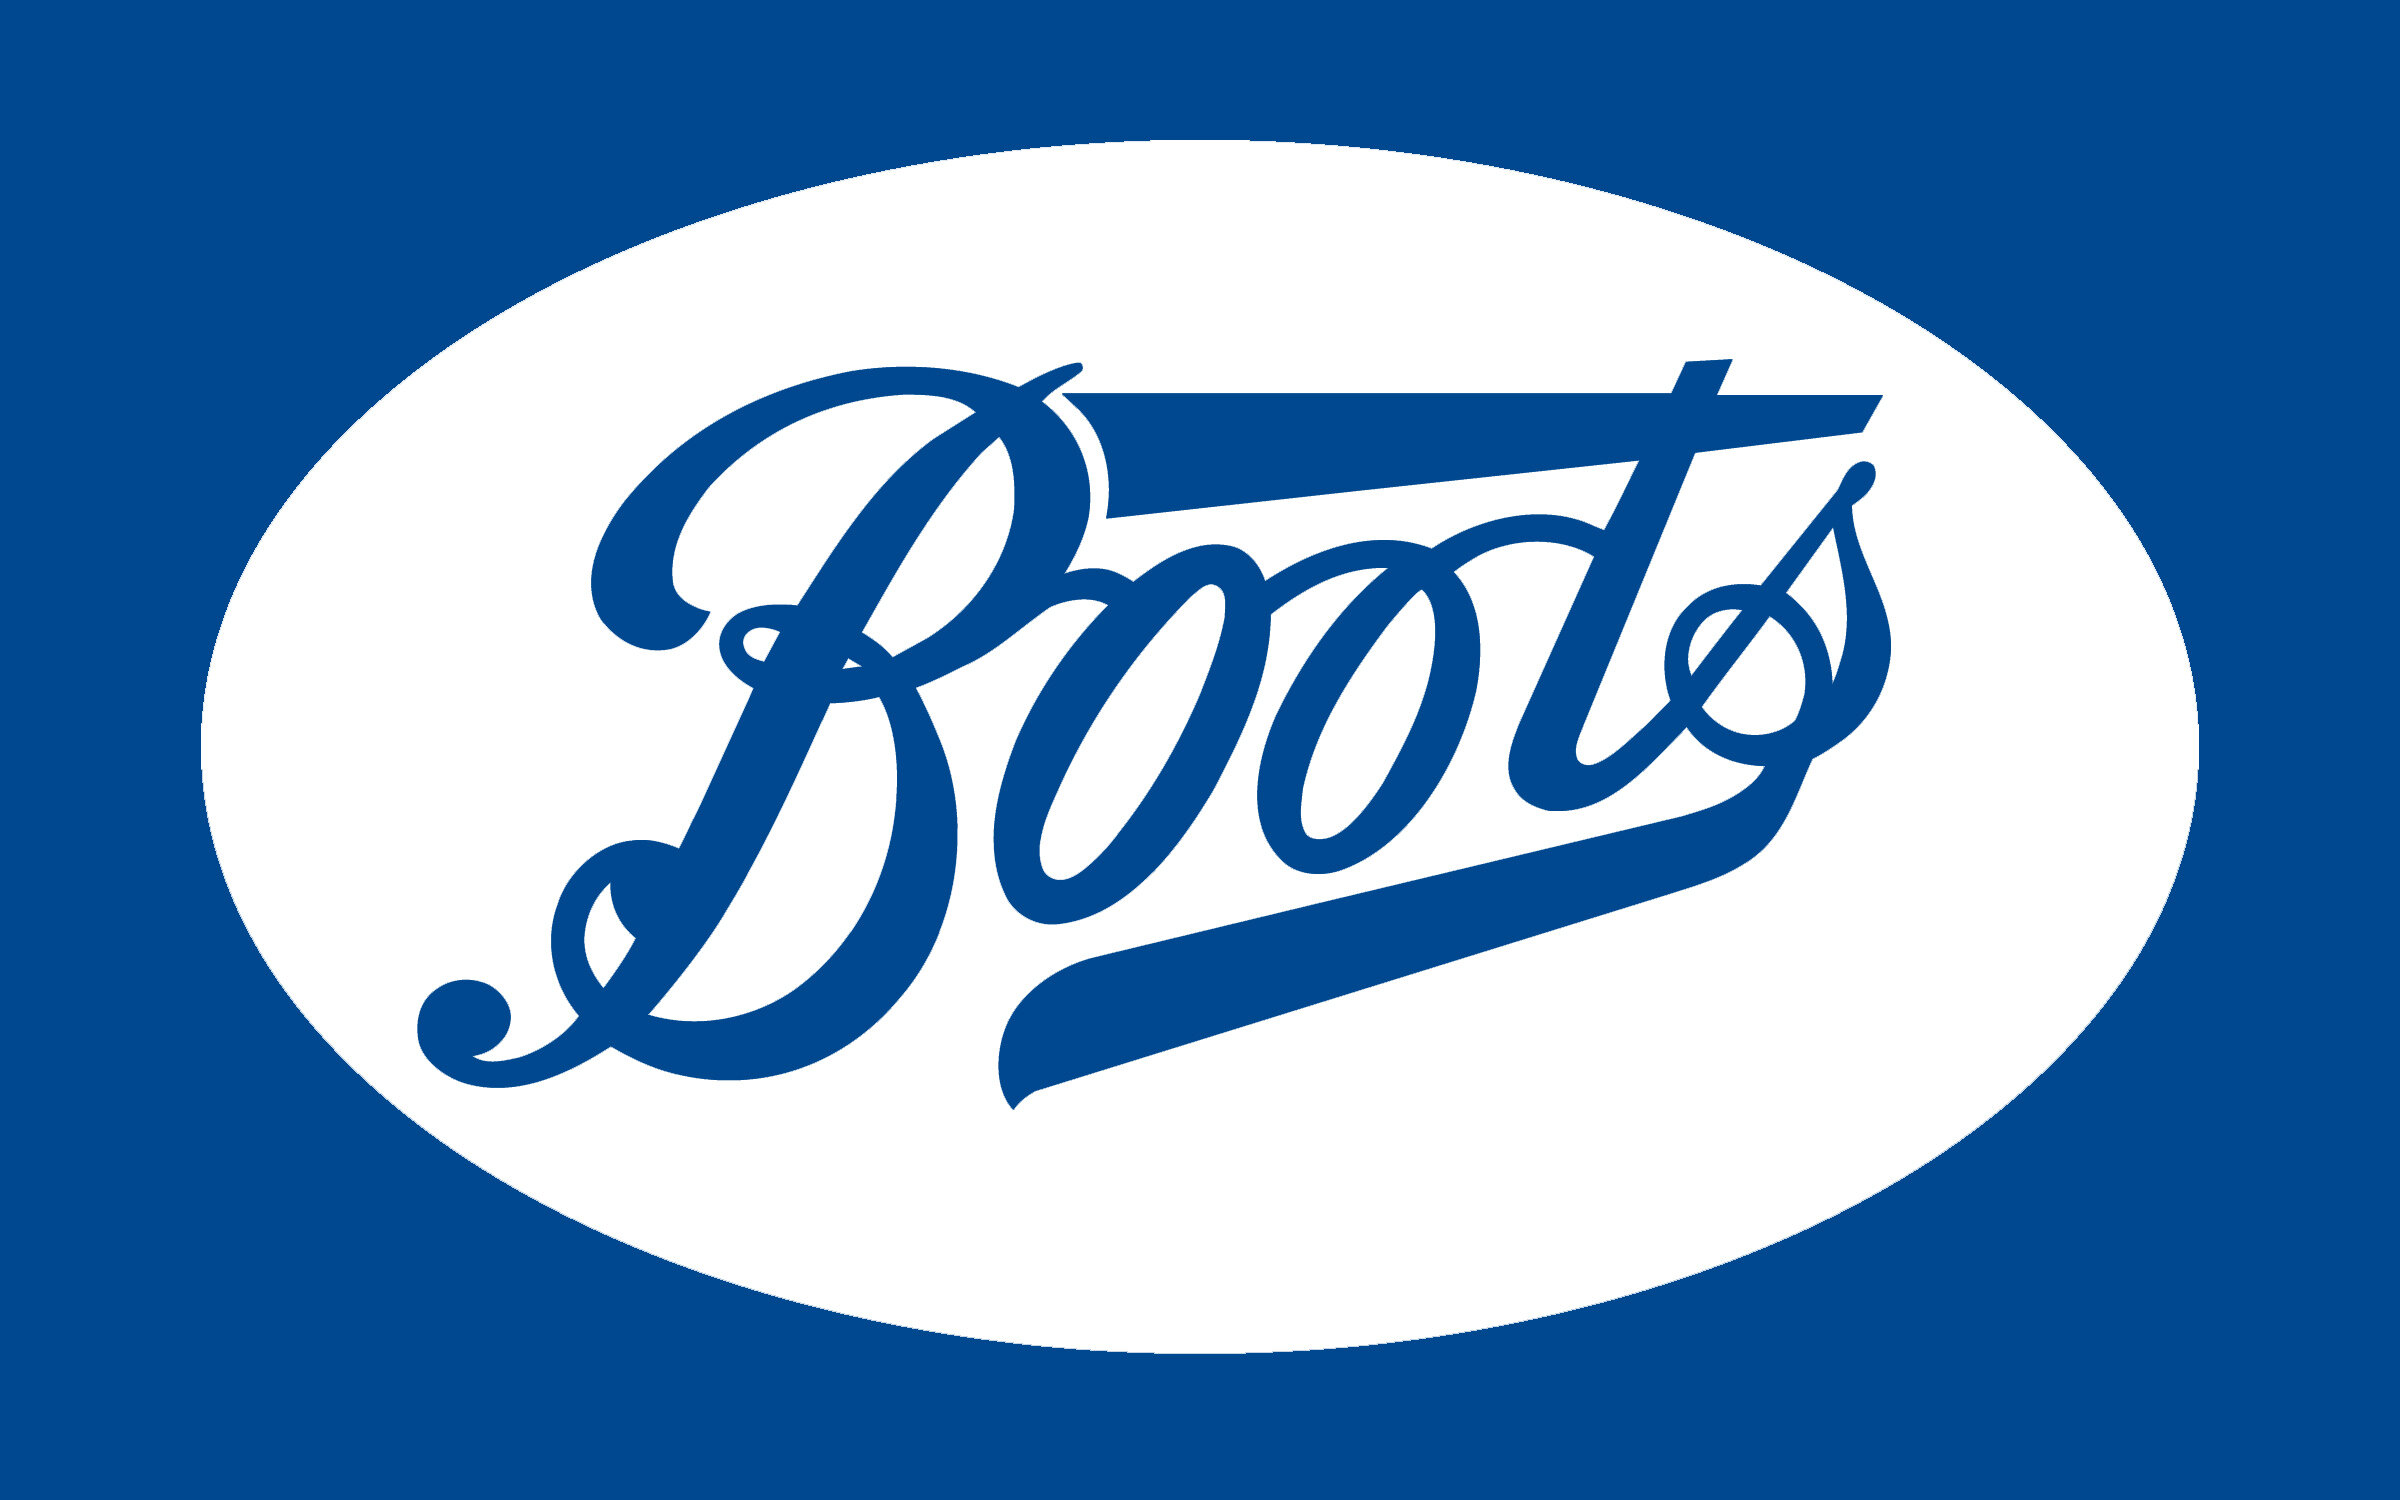 Boots-emblem.jpg